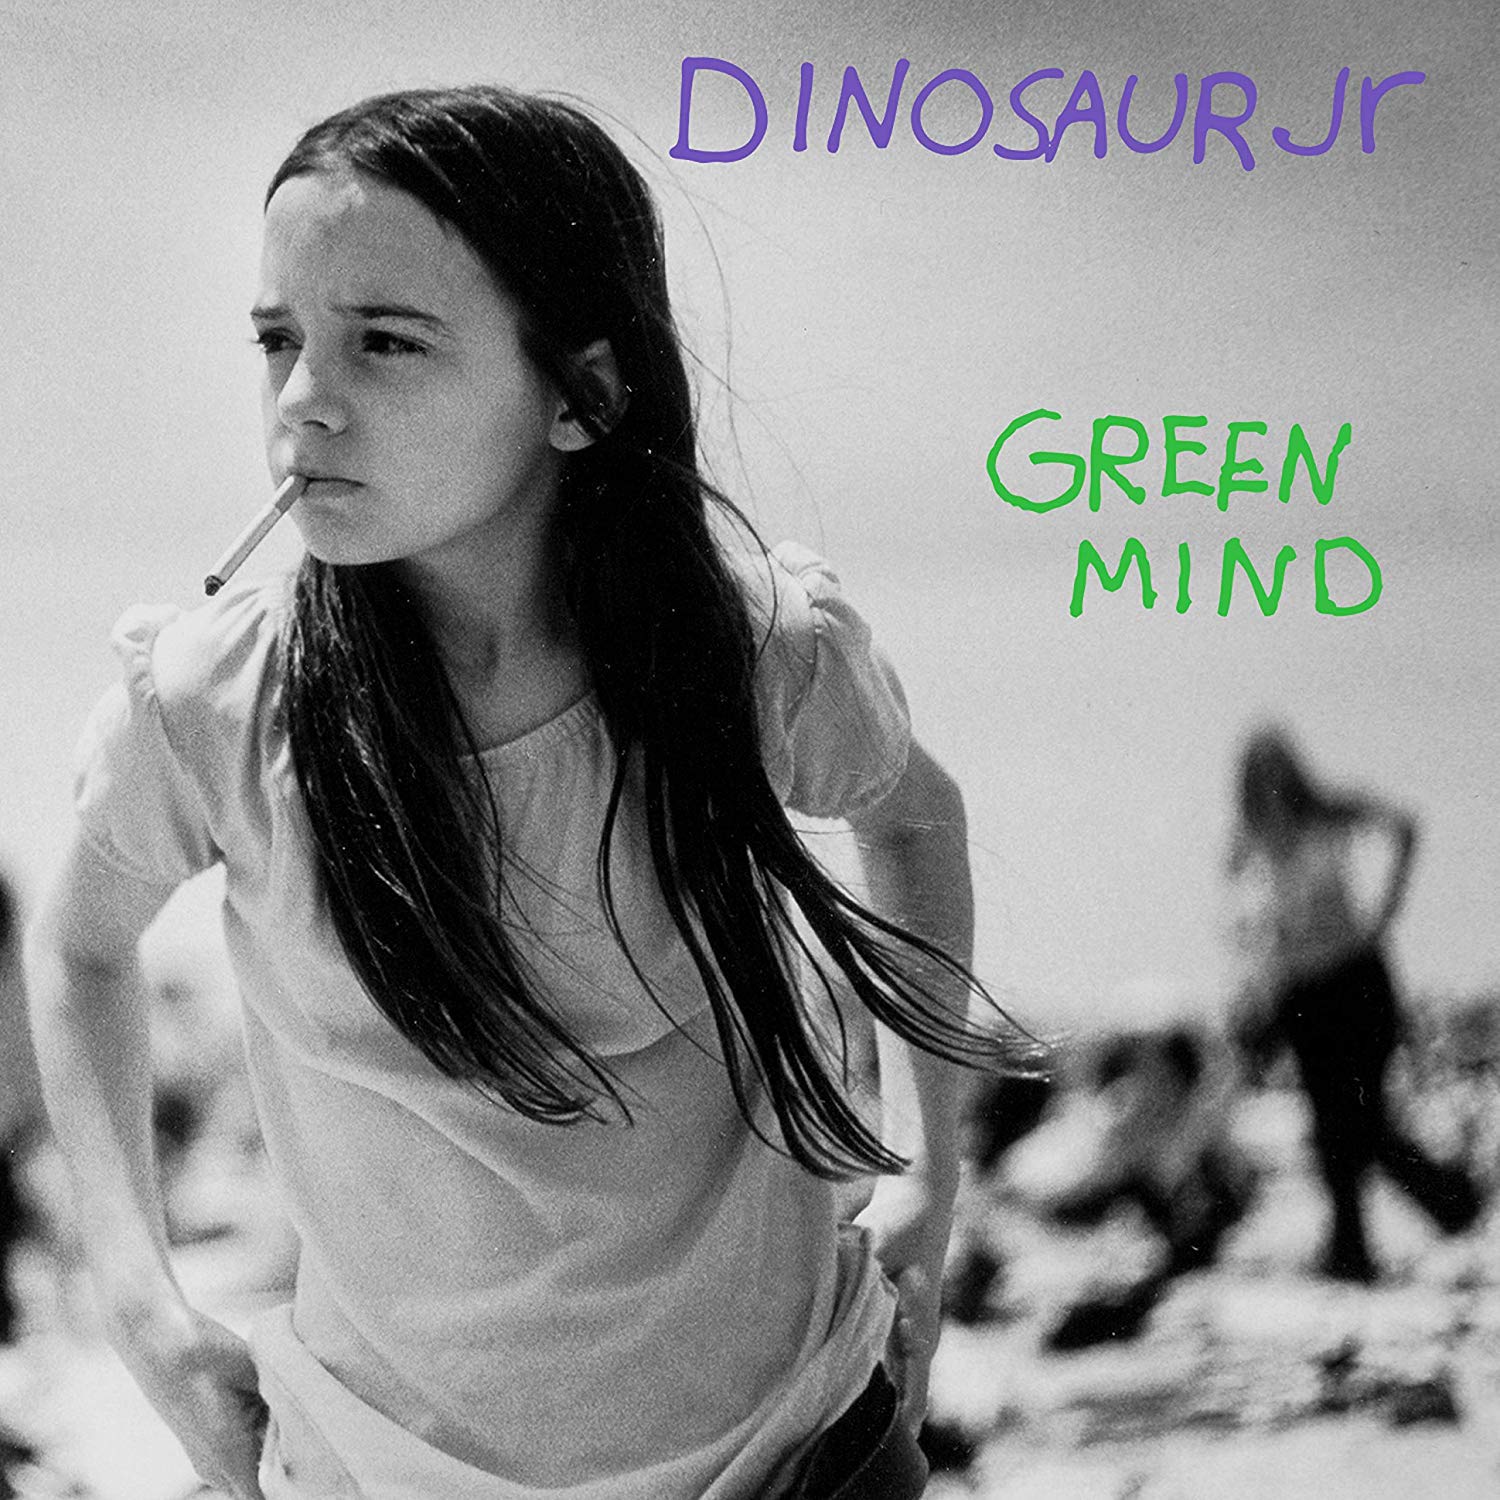 Dinosaur Jr "Green Mind" Deluxe 2LP